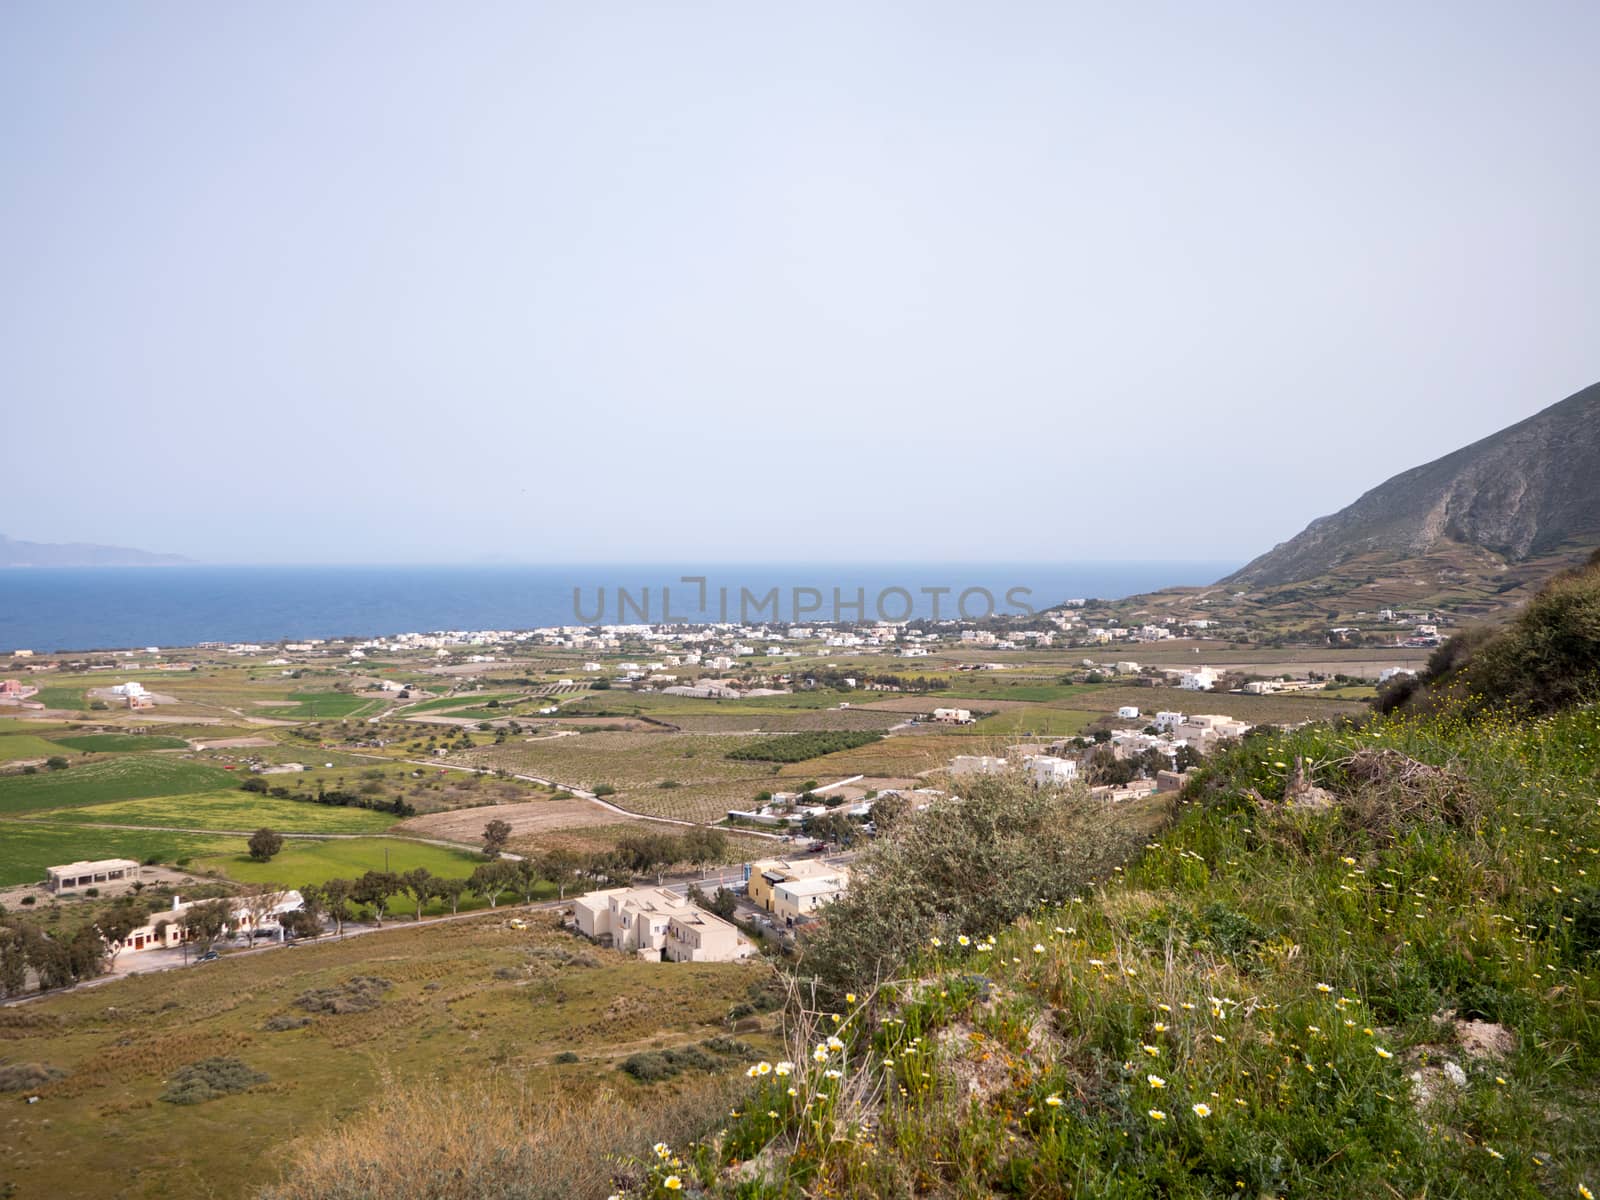 Panoramic view of Santorini island in Cyclades, Greece